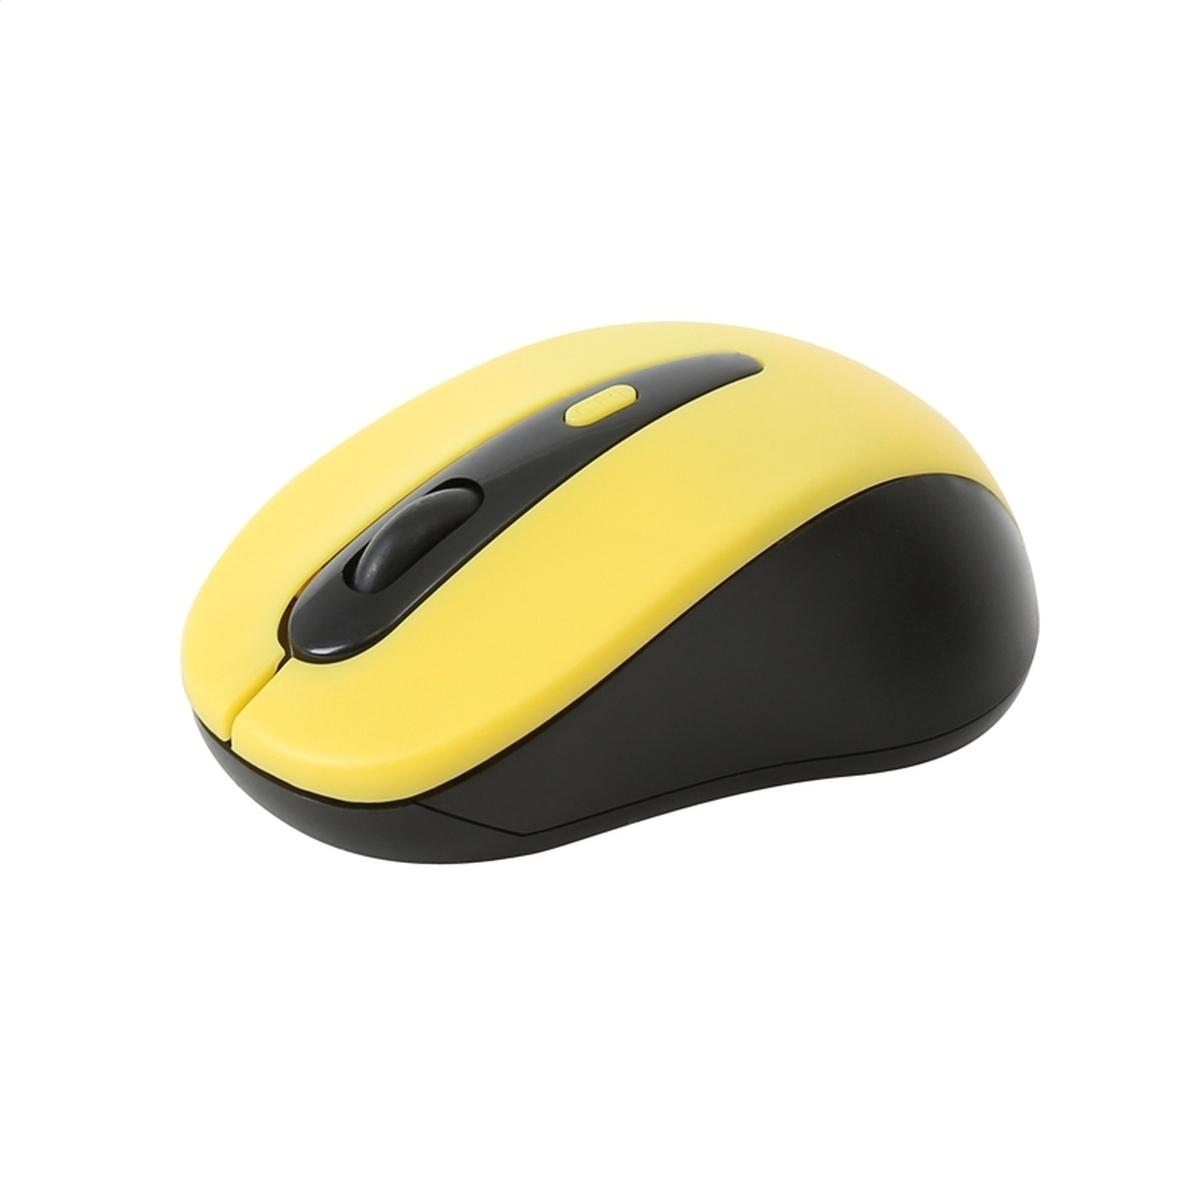 Mouse omega om-416 wireless 800-1200-1600dpi black/yellow [43167]